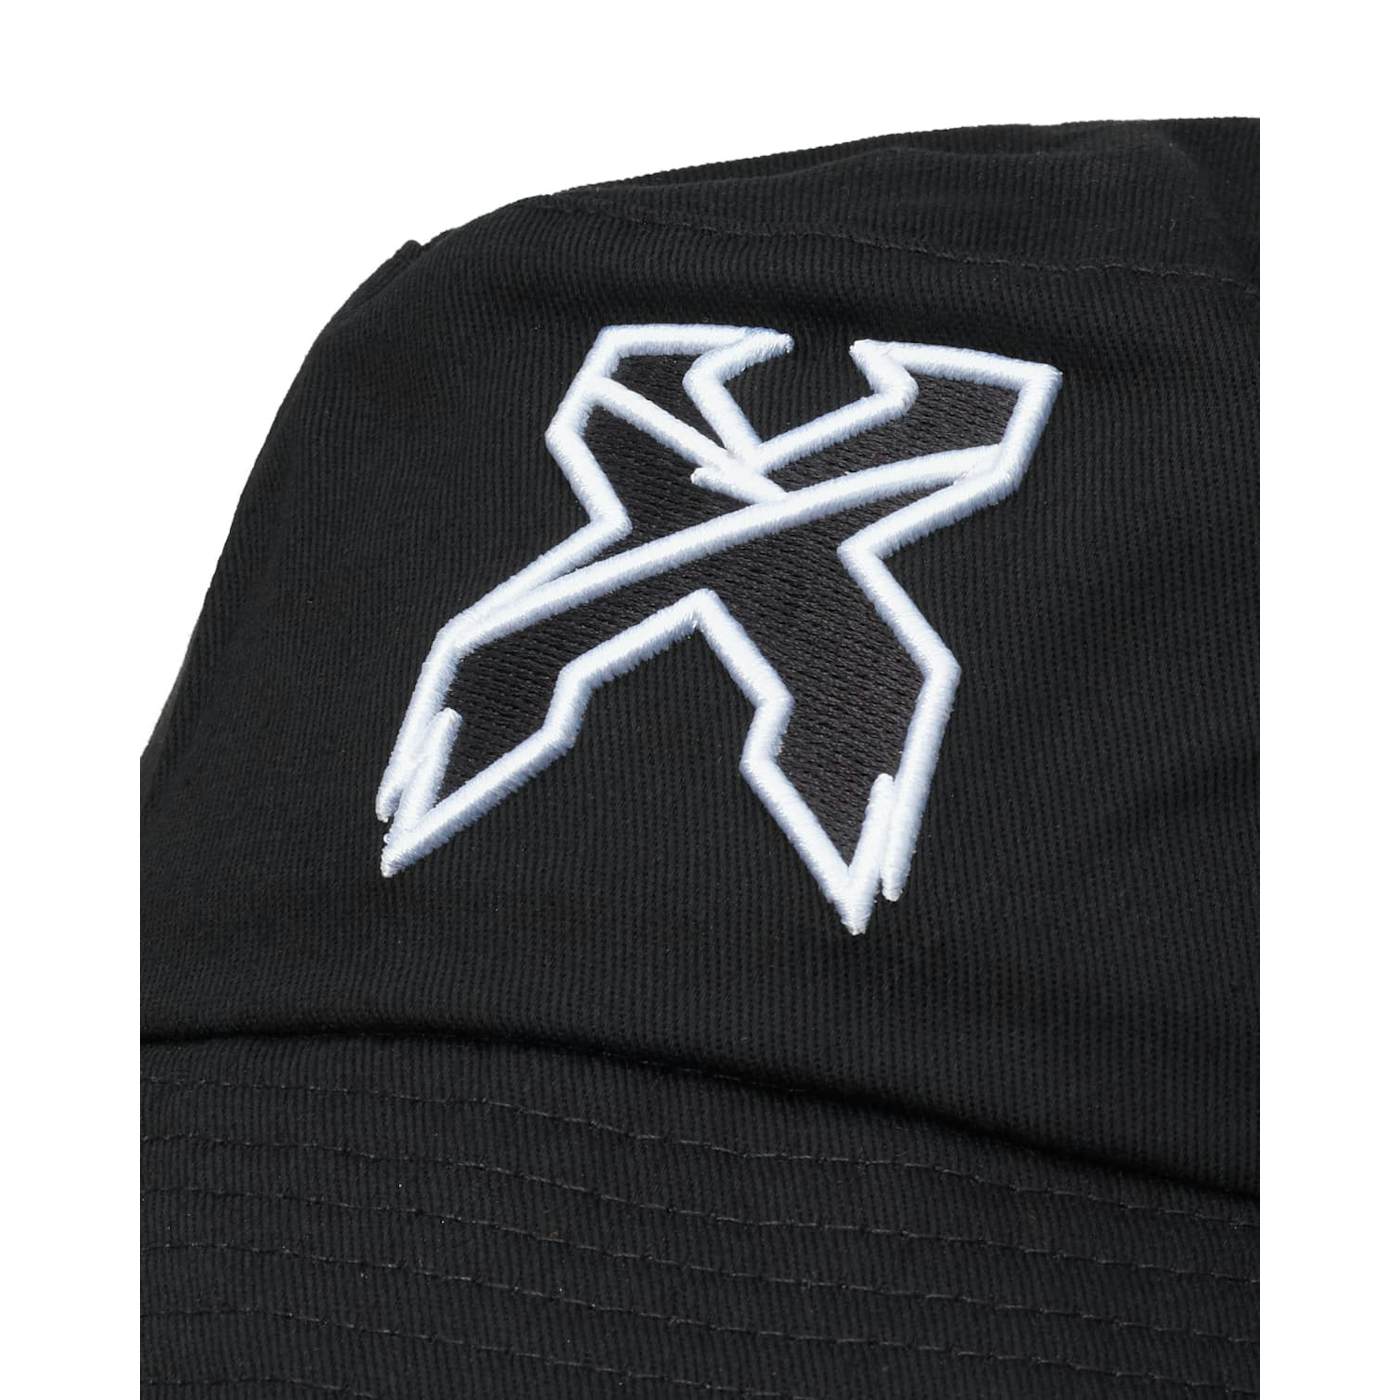 Excision 'Sliced' Logo Bucket Hat